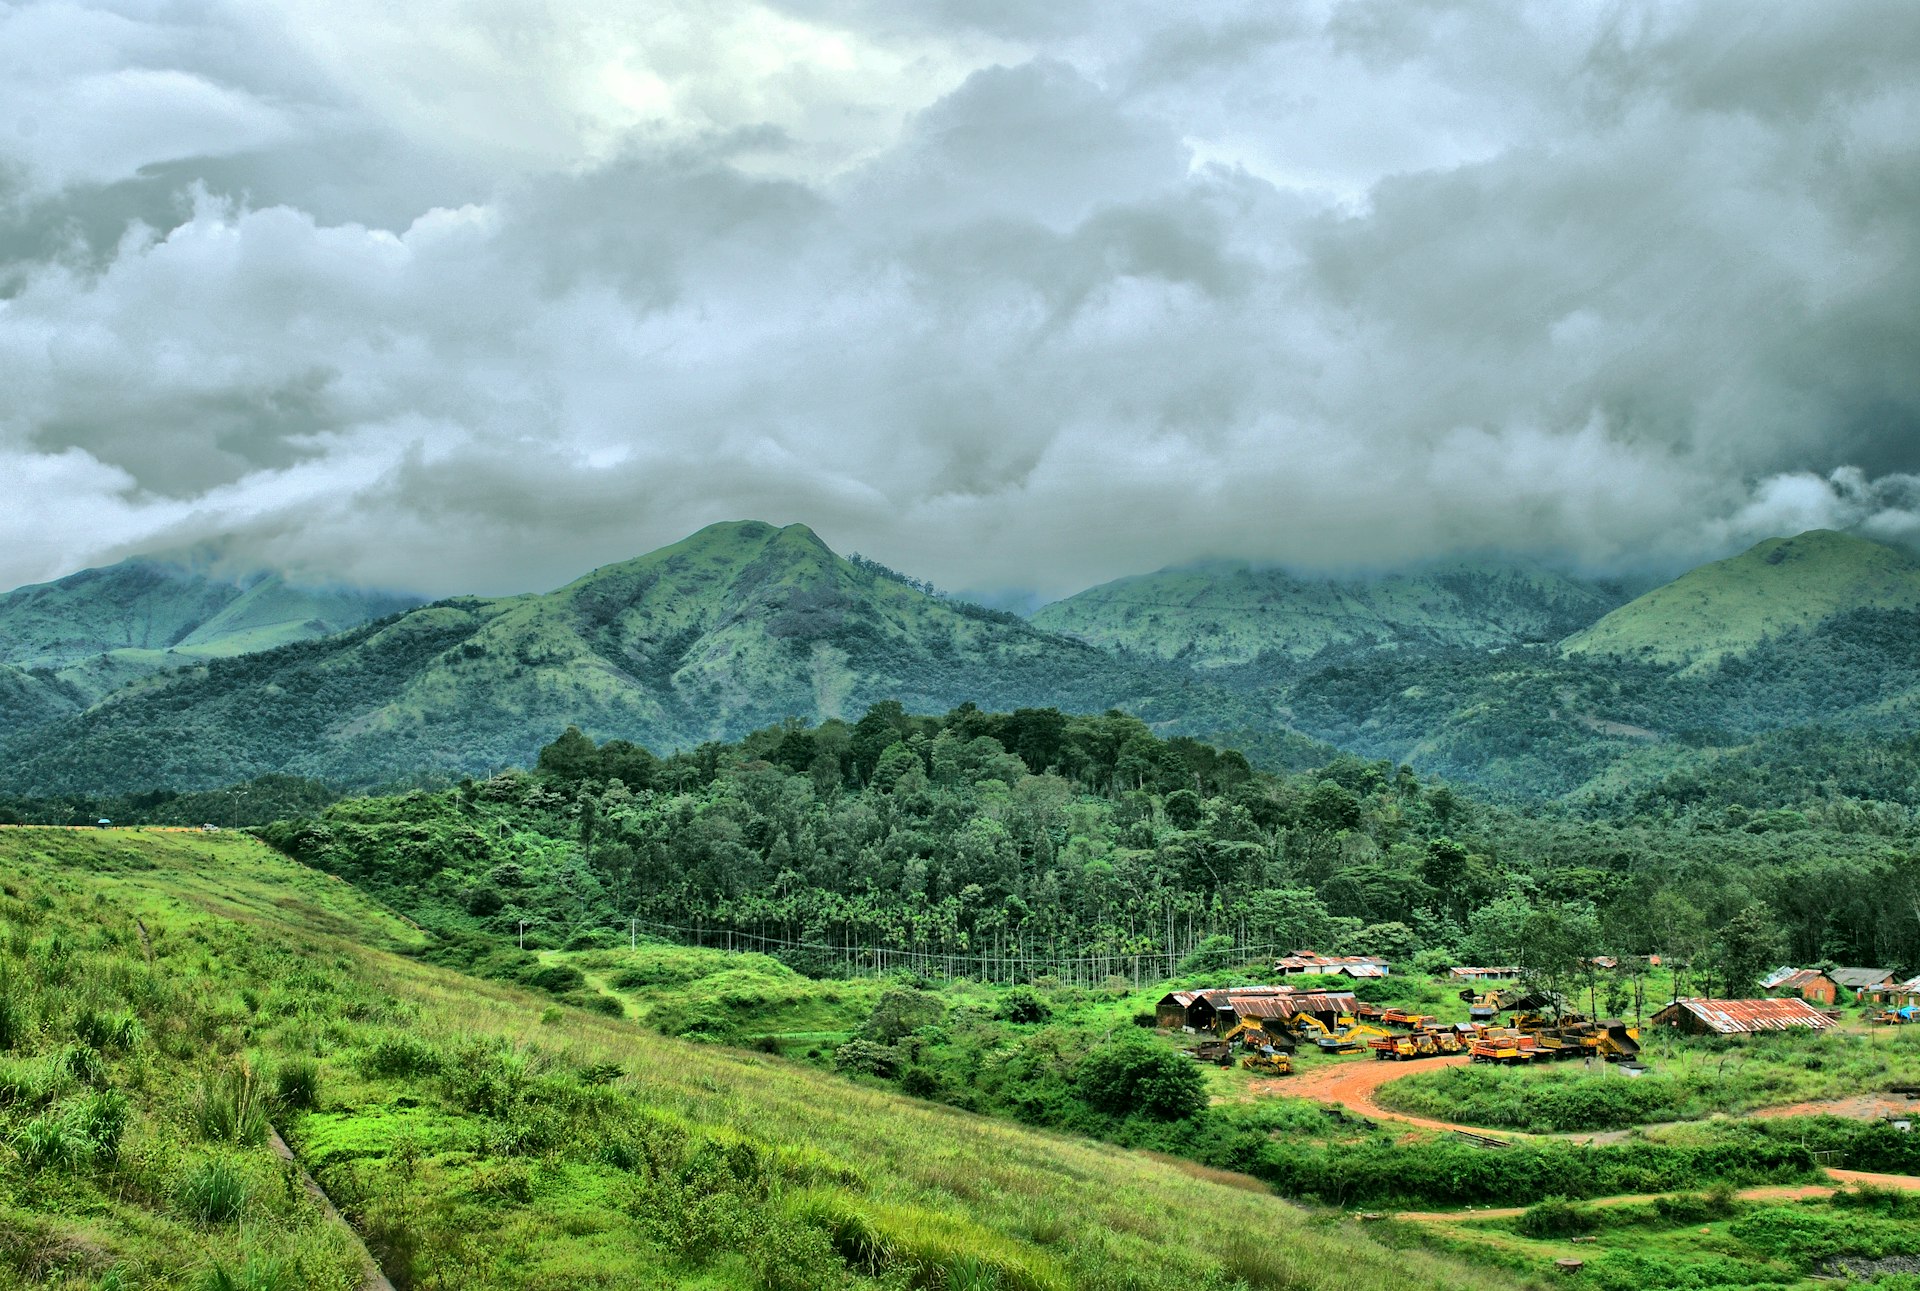 Brooding skies over the hills of Wayanad © sureshkege / Getty Images